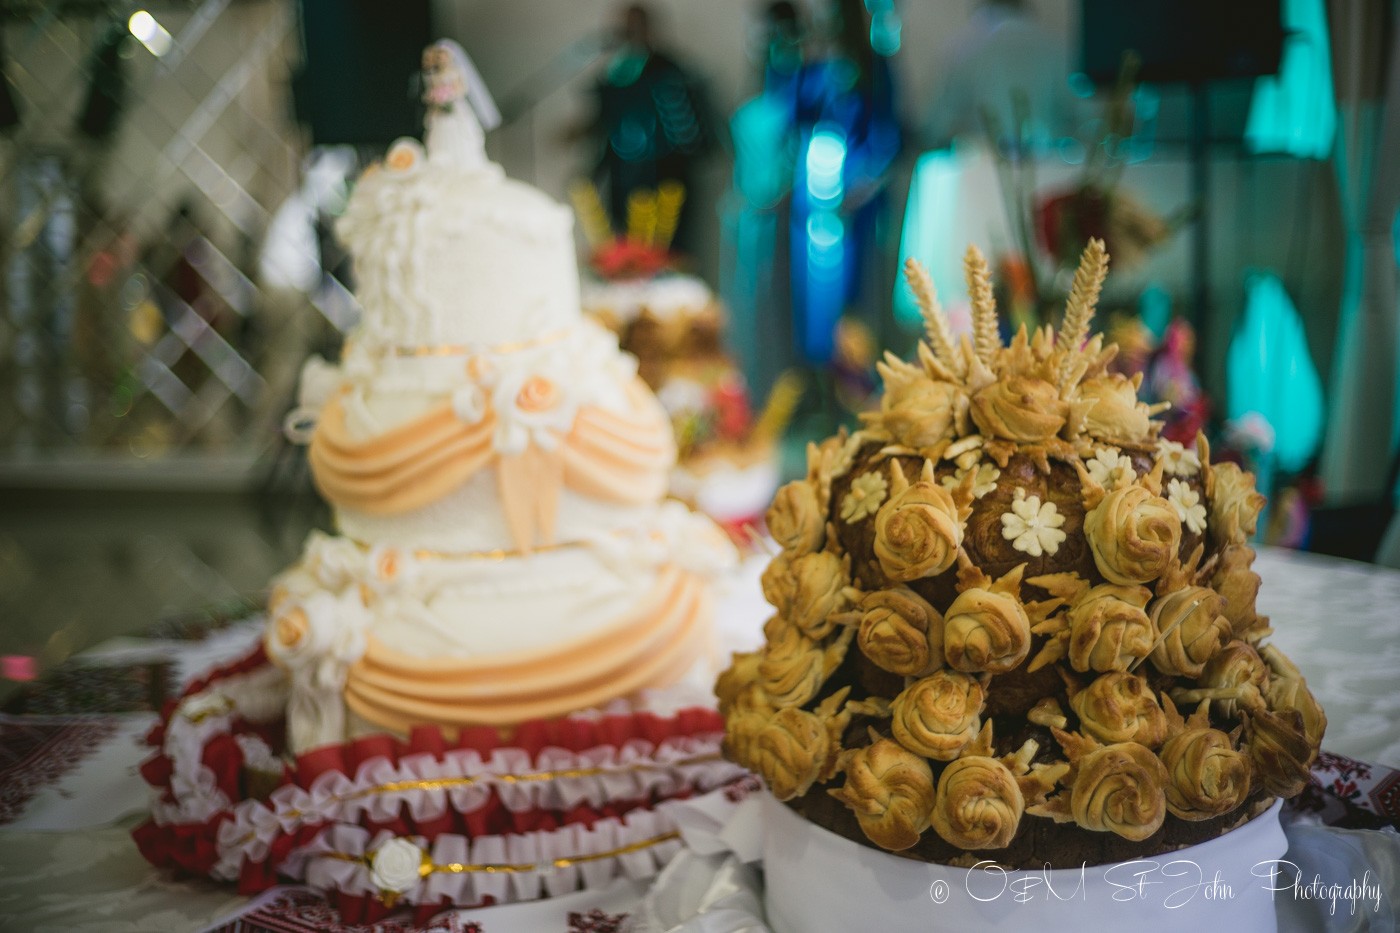 Korovai and Western Wedding cake at my cousin's wedding reception. Ukraine